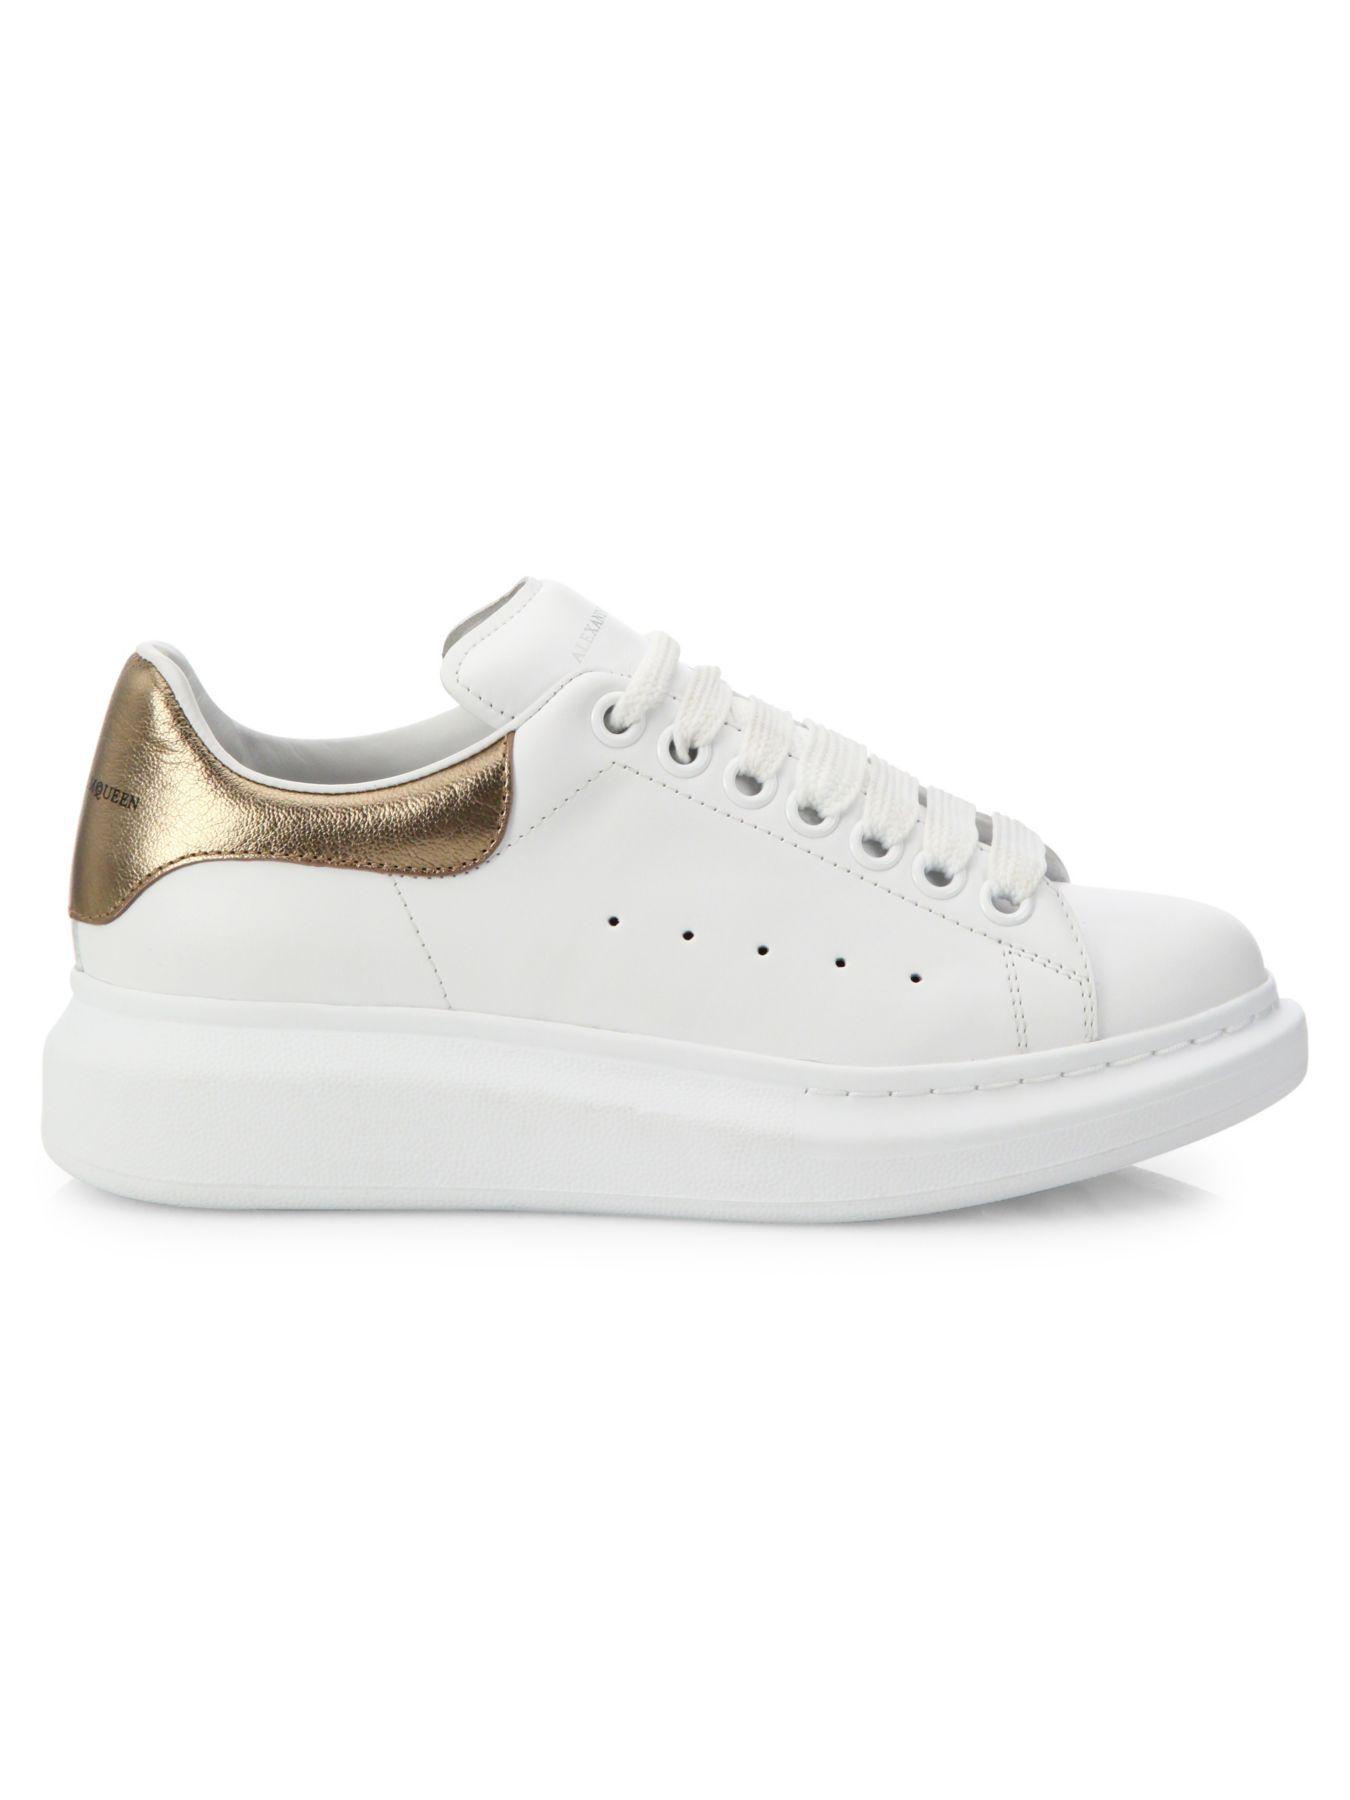 Alexander McQueen Metallic Leather Platform Sneakers in White Gold ...